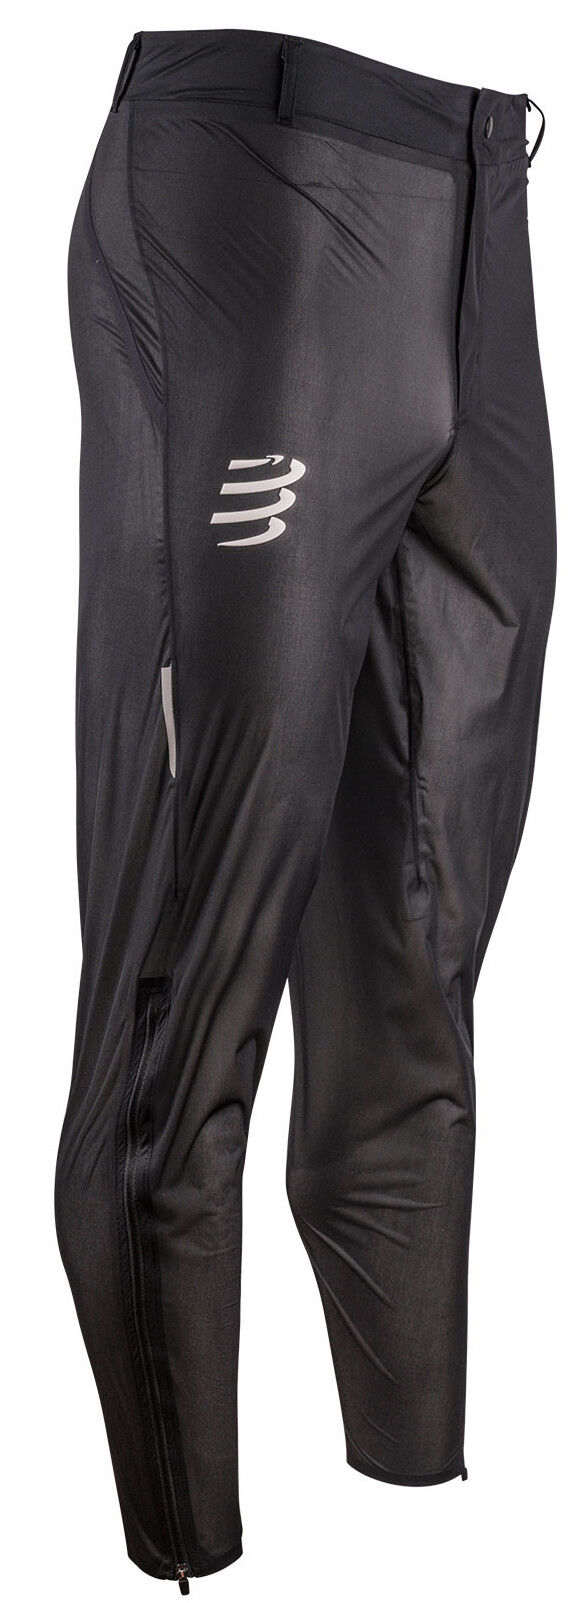 Compressport Hurricane Waterproof 10/10 Pants - Pantaloni impermeabili - Uomo